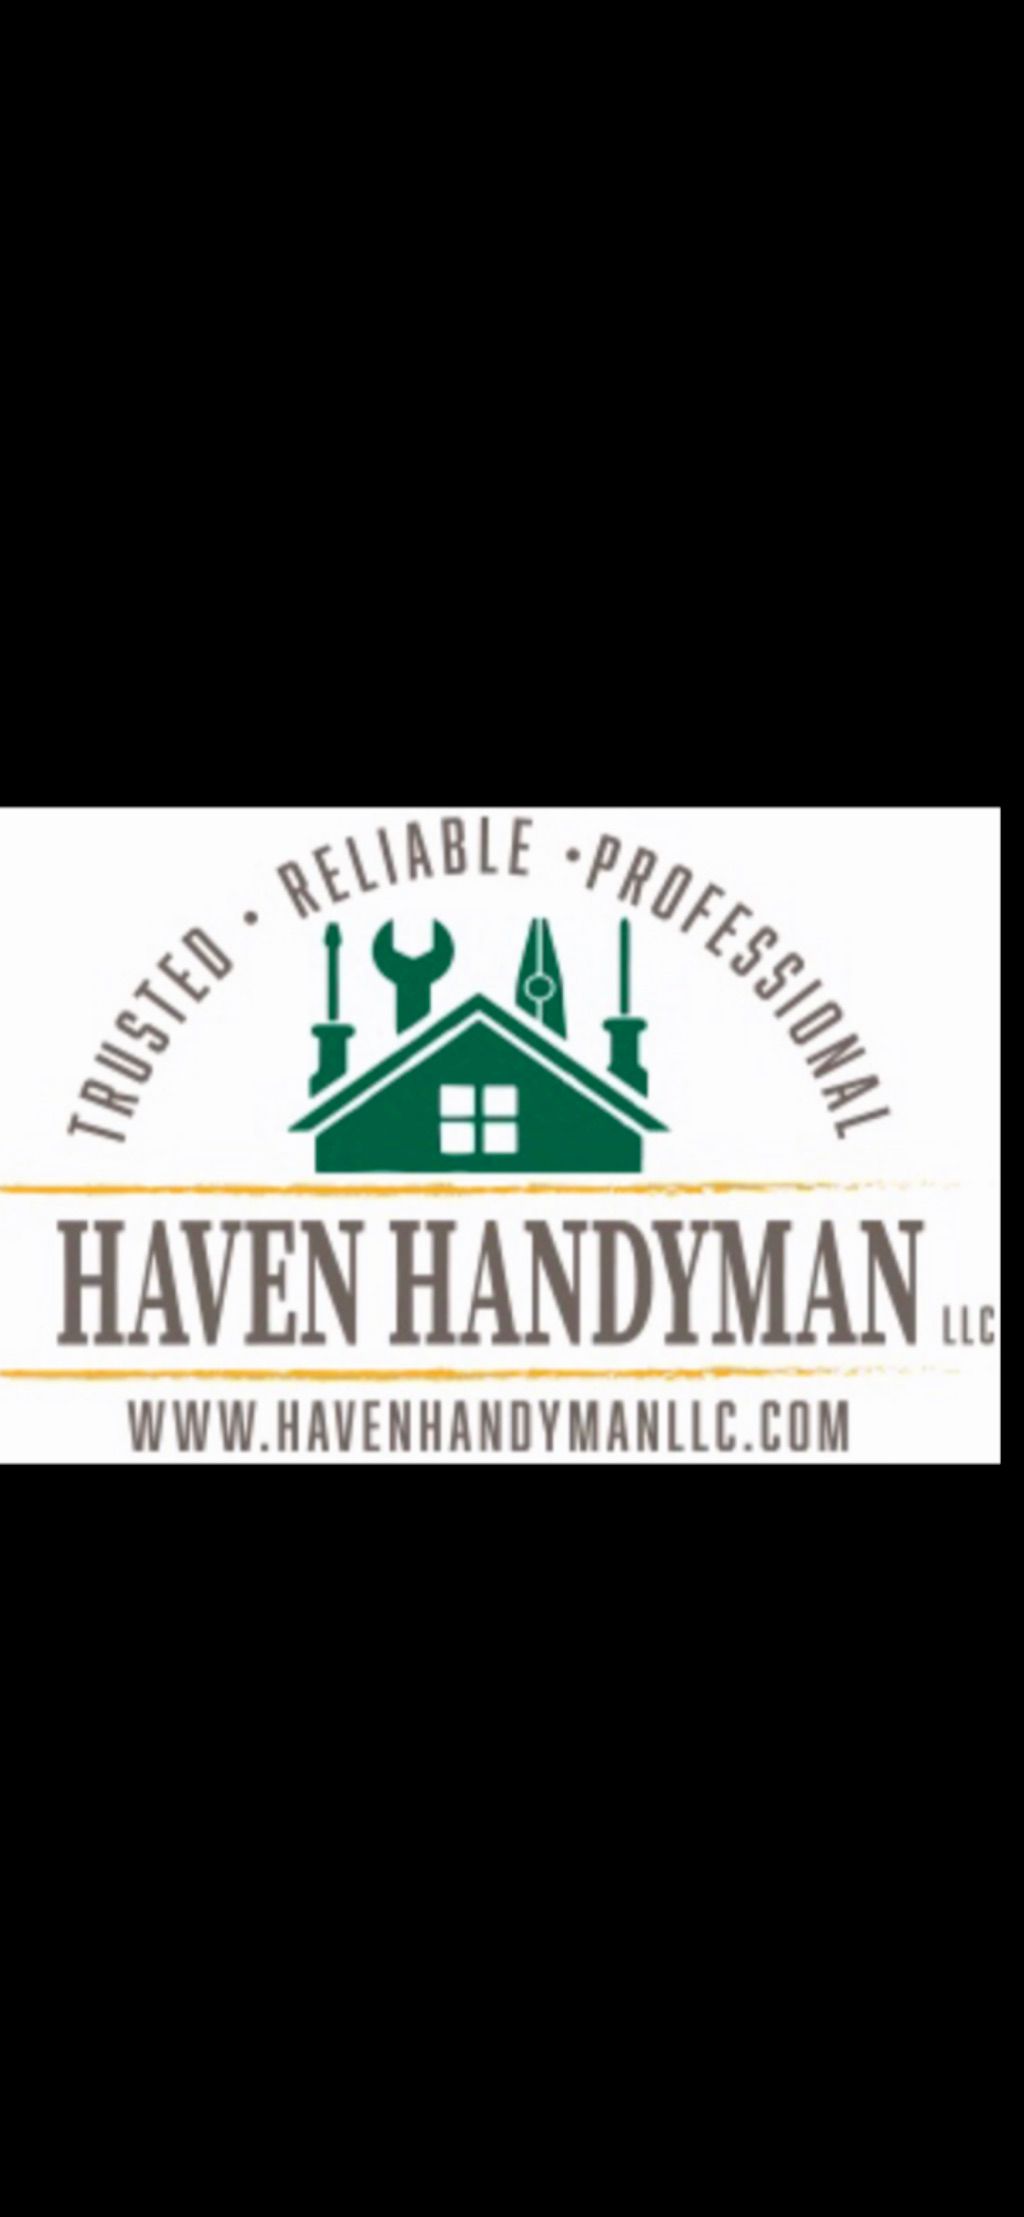 Haven Handyman, LLC